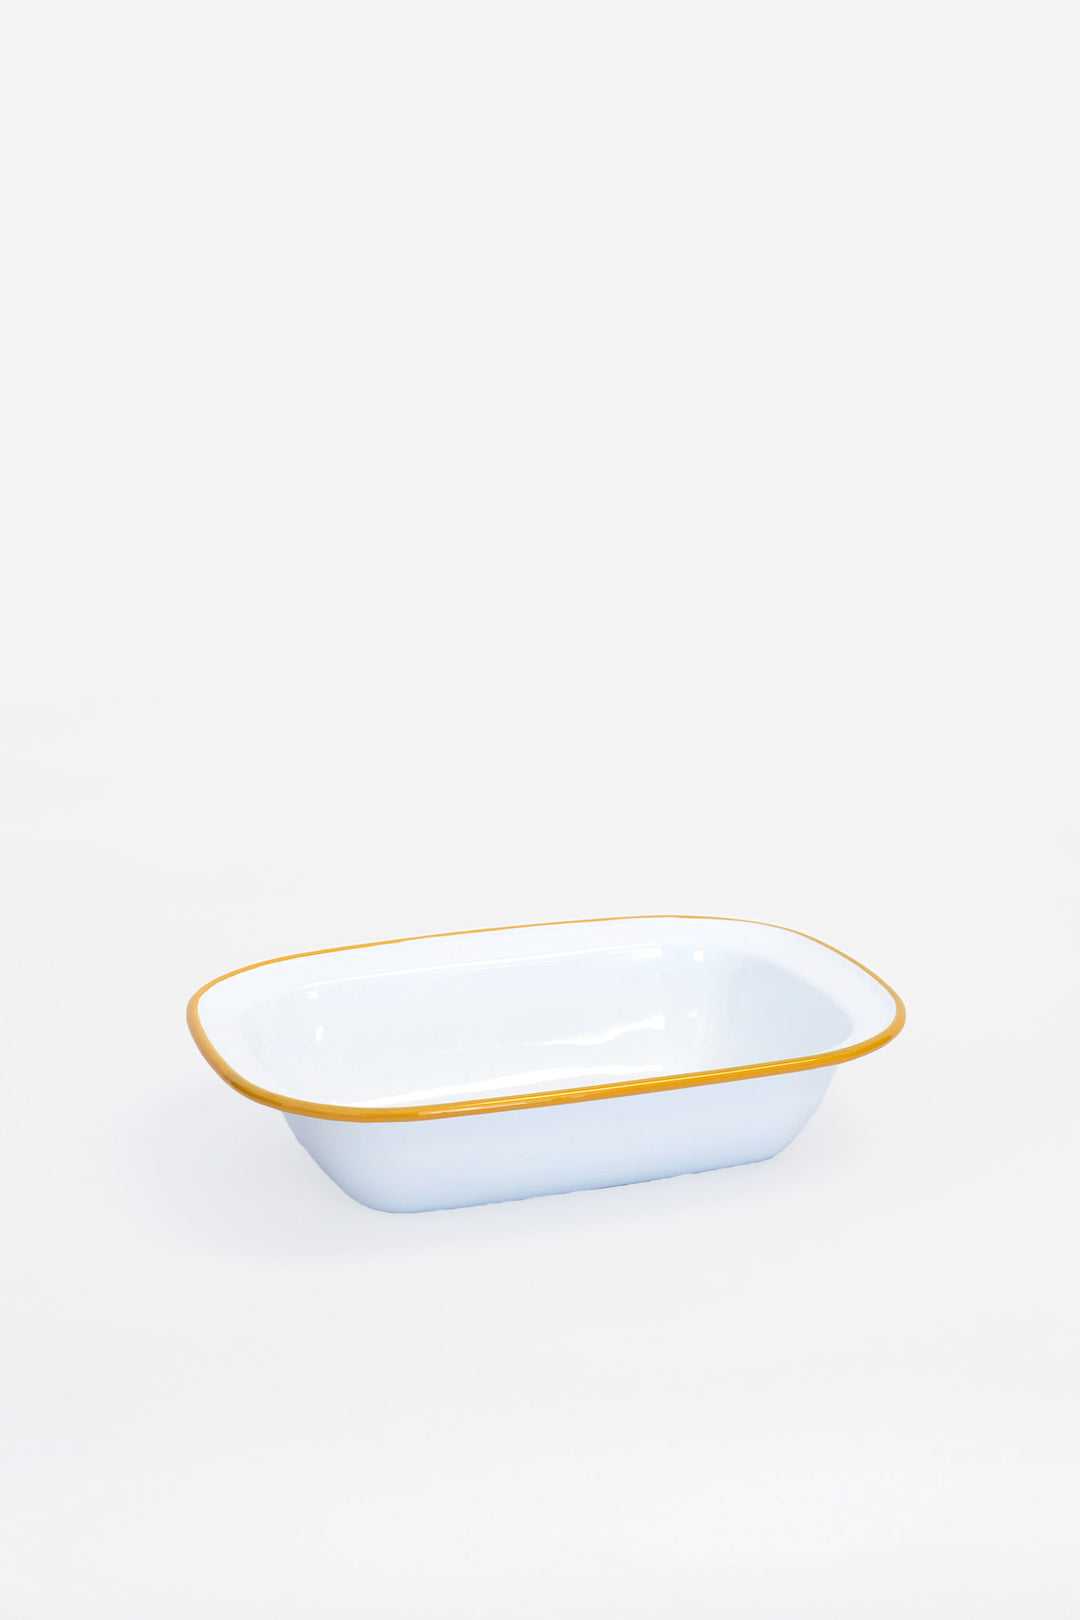 Mustard Enamel Bake Pan / Pie Dish - Domestic Science Home